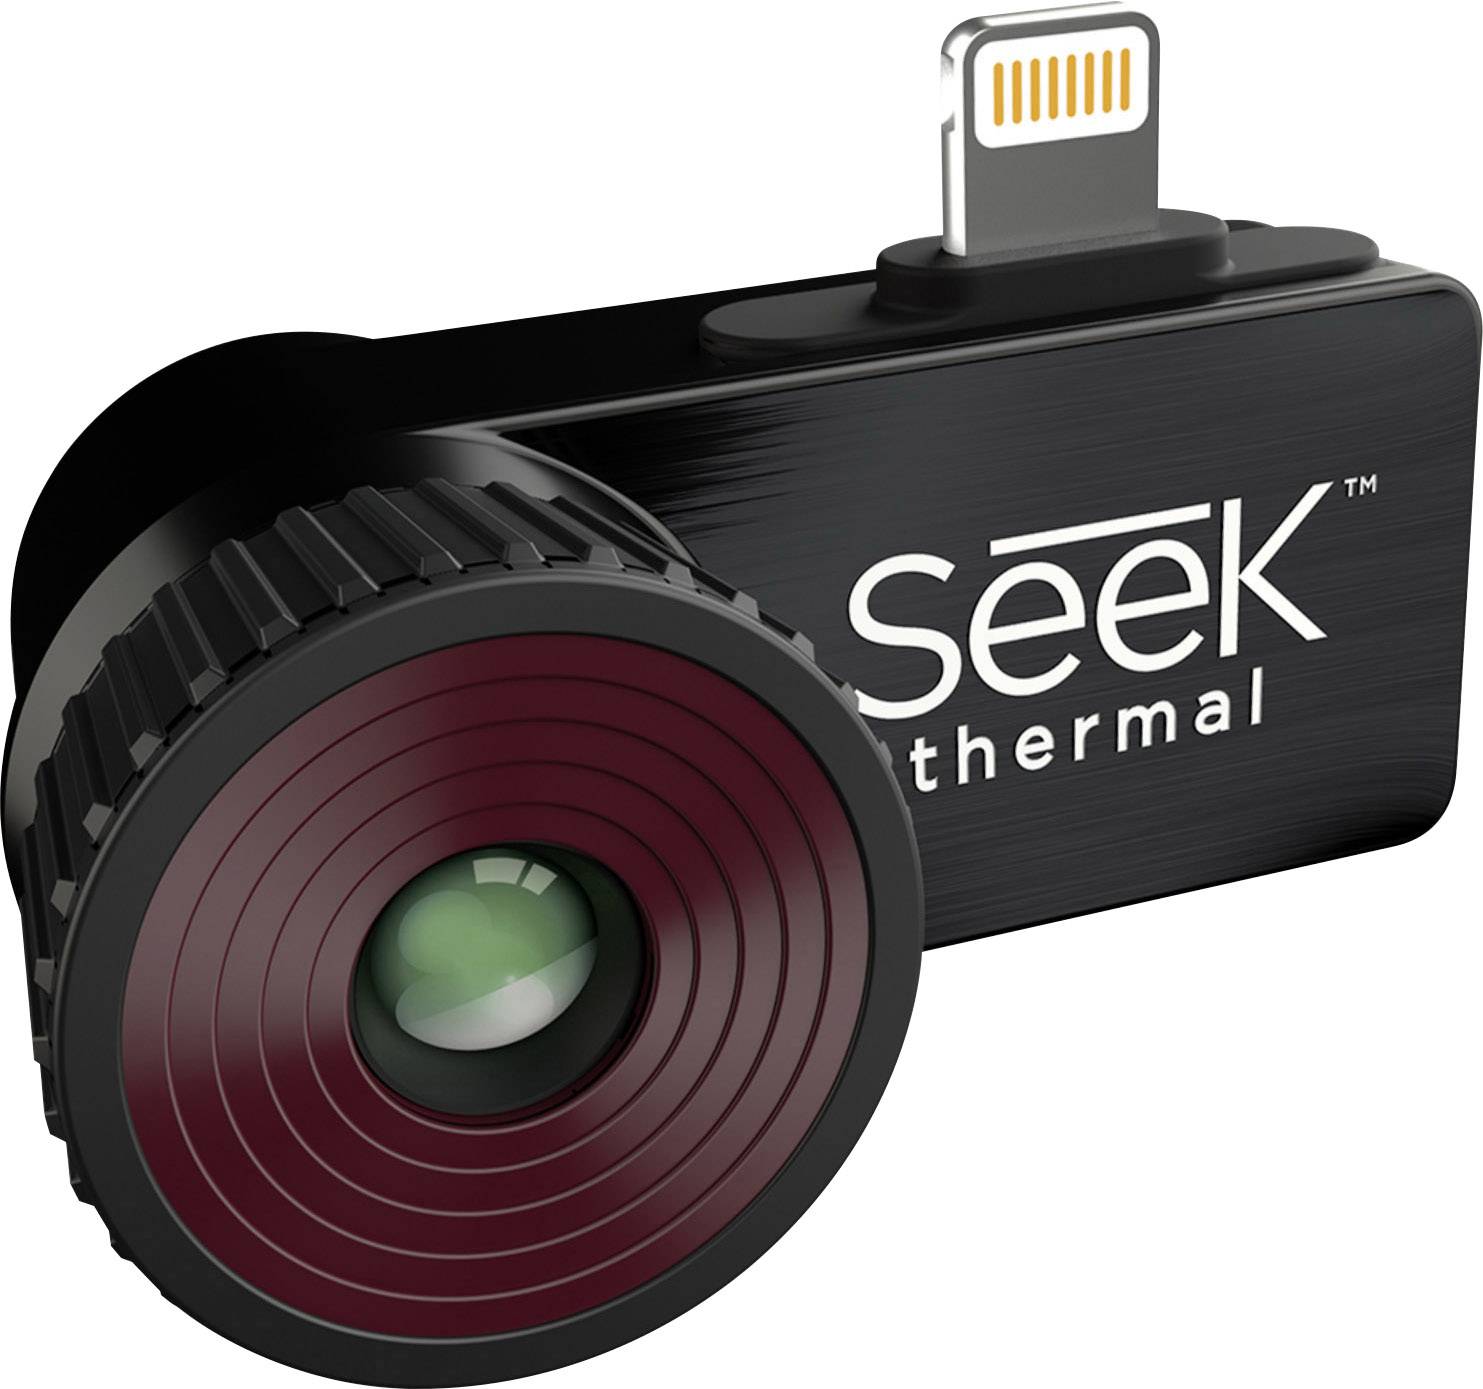 Lightning Seek Thermal Compact Thermal Imaging Camera for iOS 